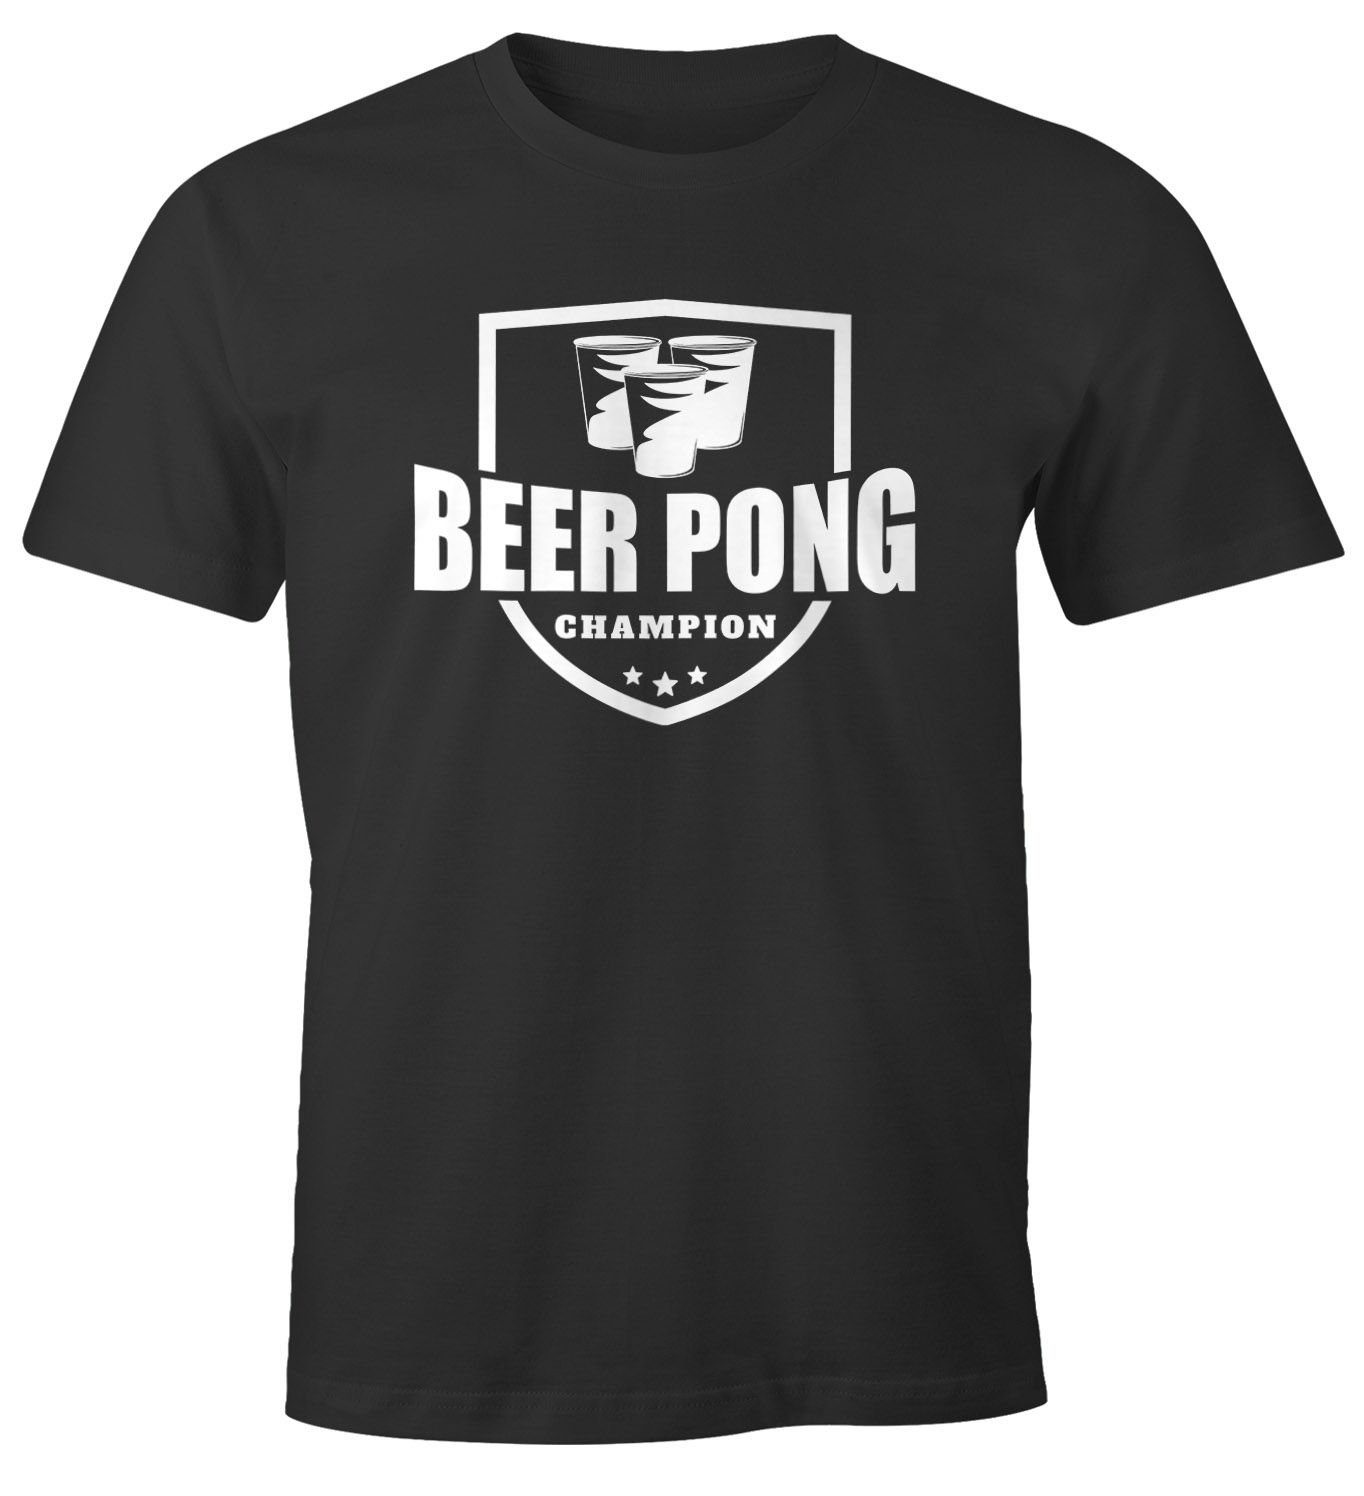 Beer Party mit Trink Herren Moonworks® Shirt Pong T-Shirt Print Print-Shirt Champion Saufen Bier lustiges MoonWorks